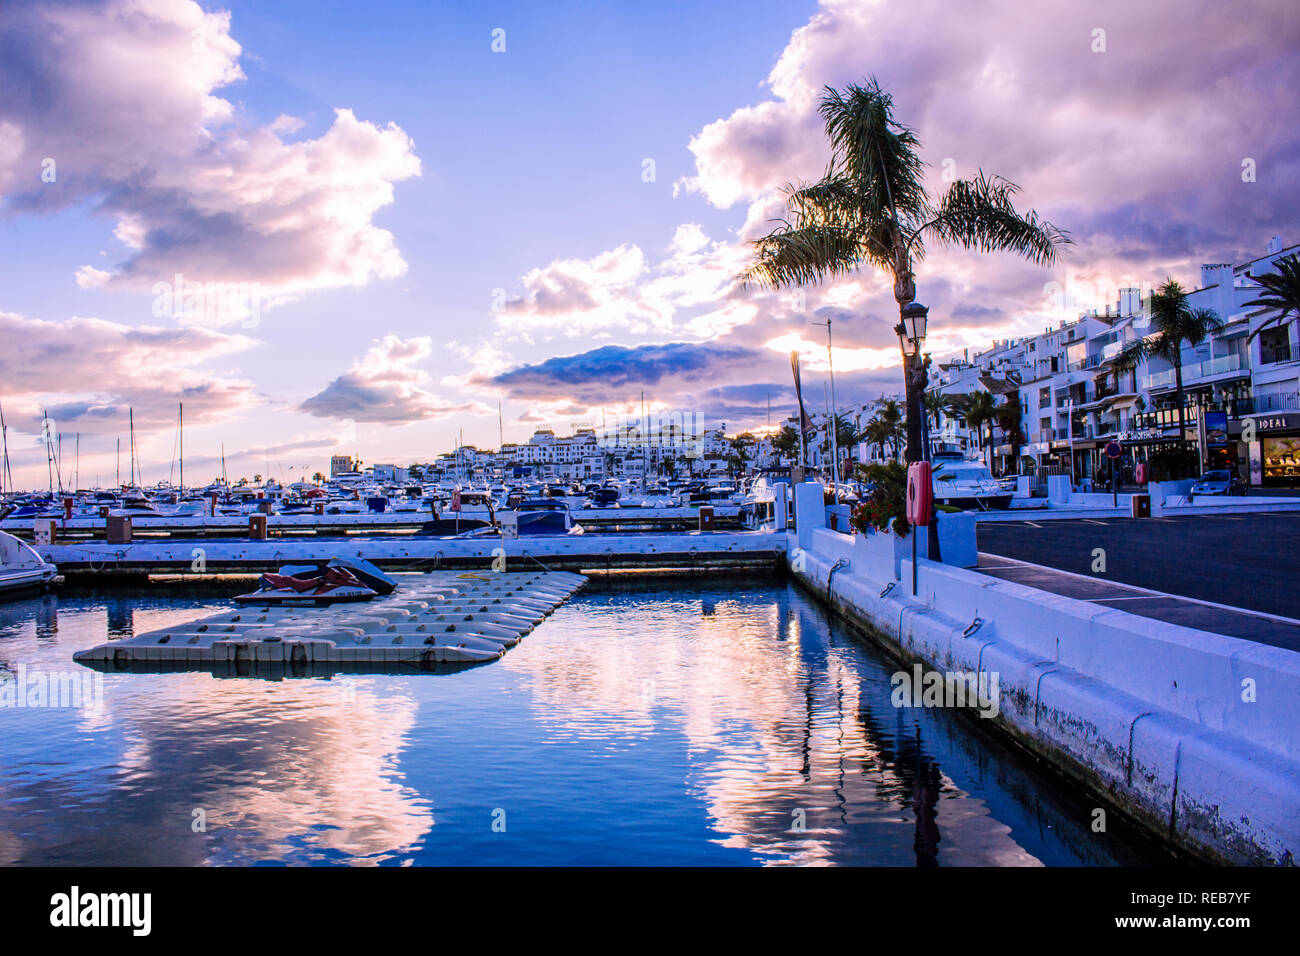 Port of Puerto Banus. Puerto Banus, Marbella, Costa del Sol, Andalusia,  Spain. Picture taken – 20 January 2019 Stock Photo - Alamy